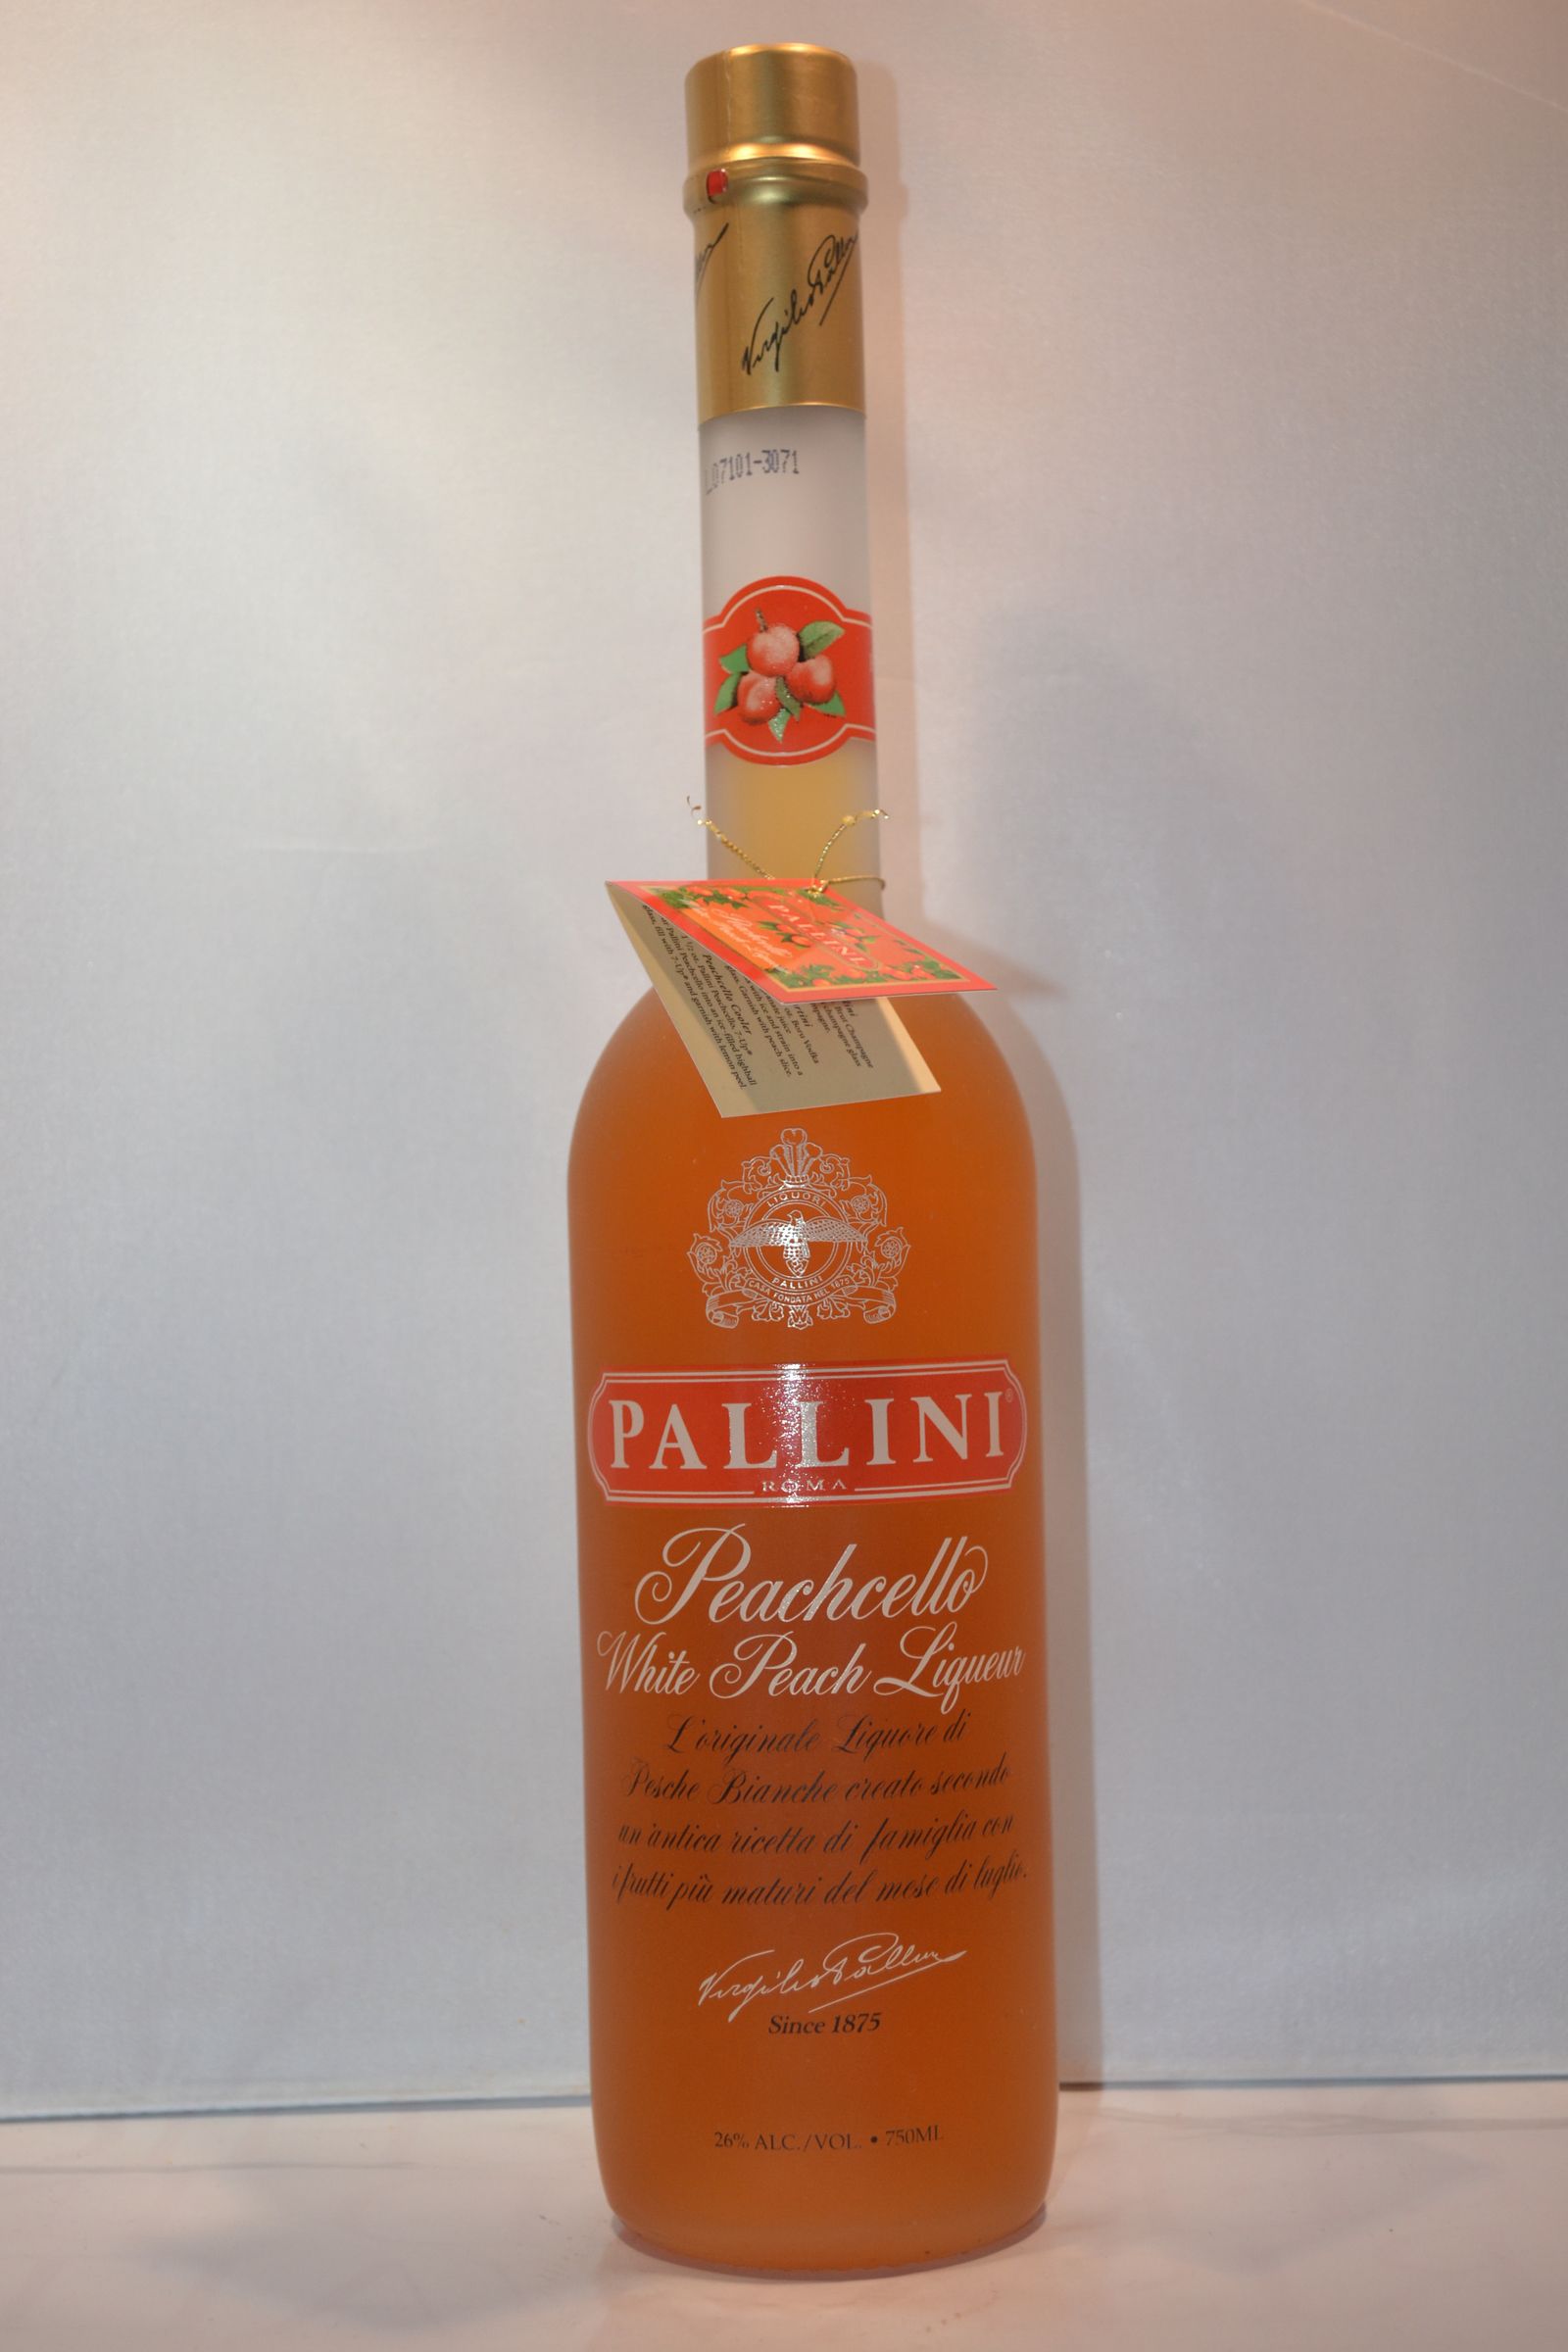 PALLINI PEACHELLO Remedy – 750ml Liquor